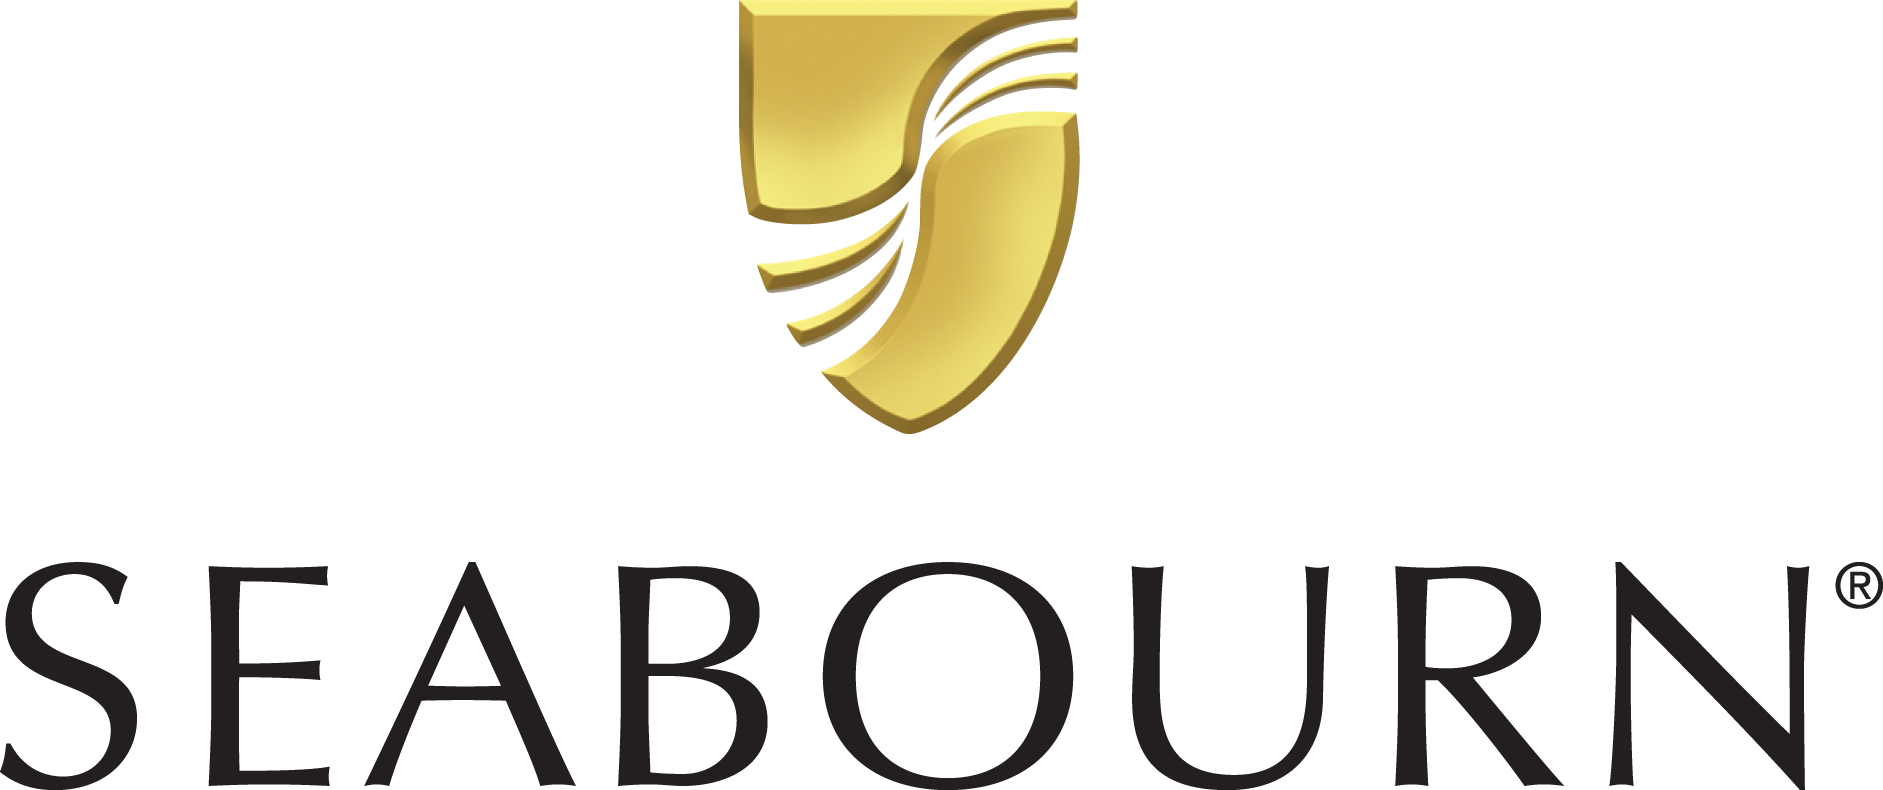 Seabourn Pursuit Reederei Logo